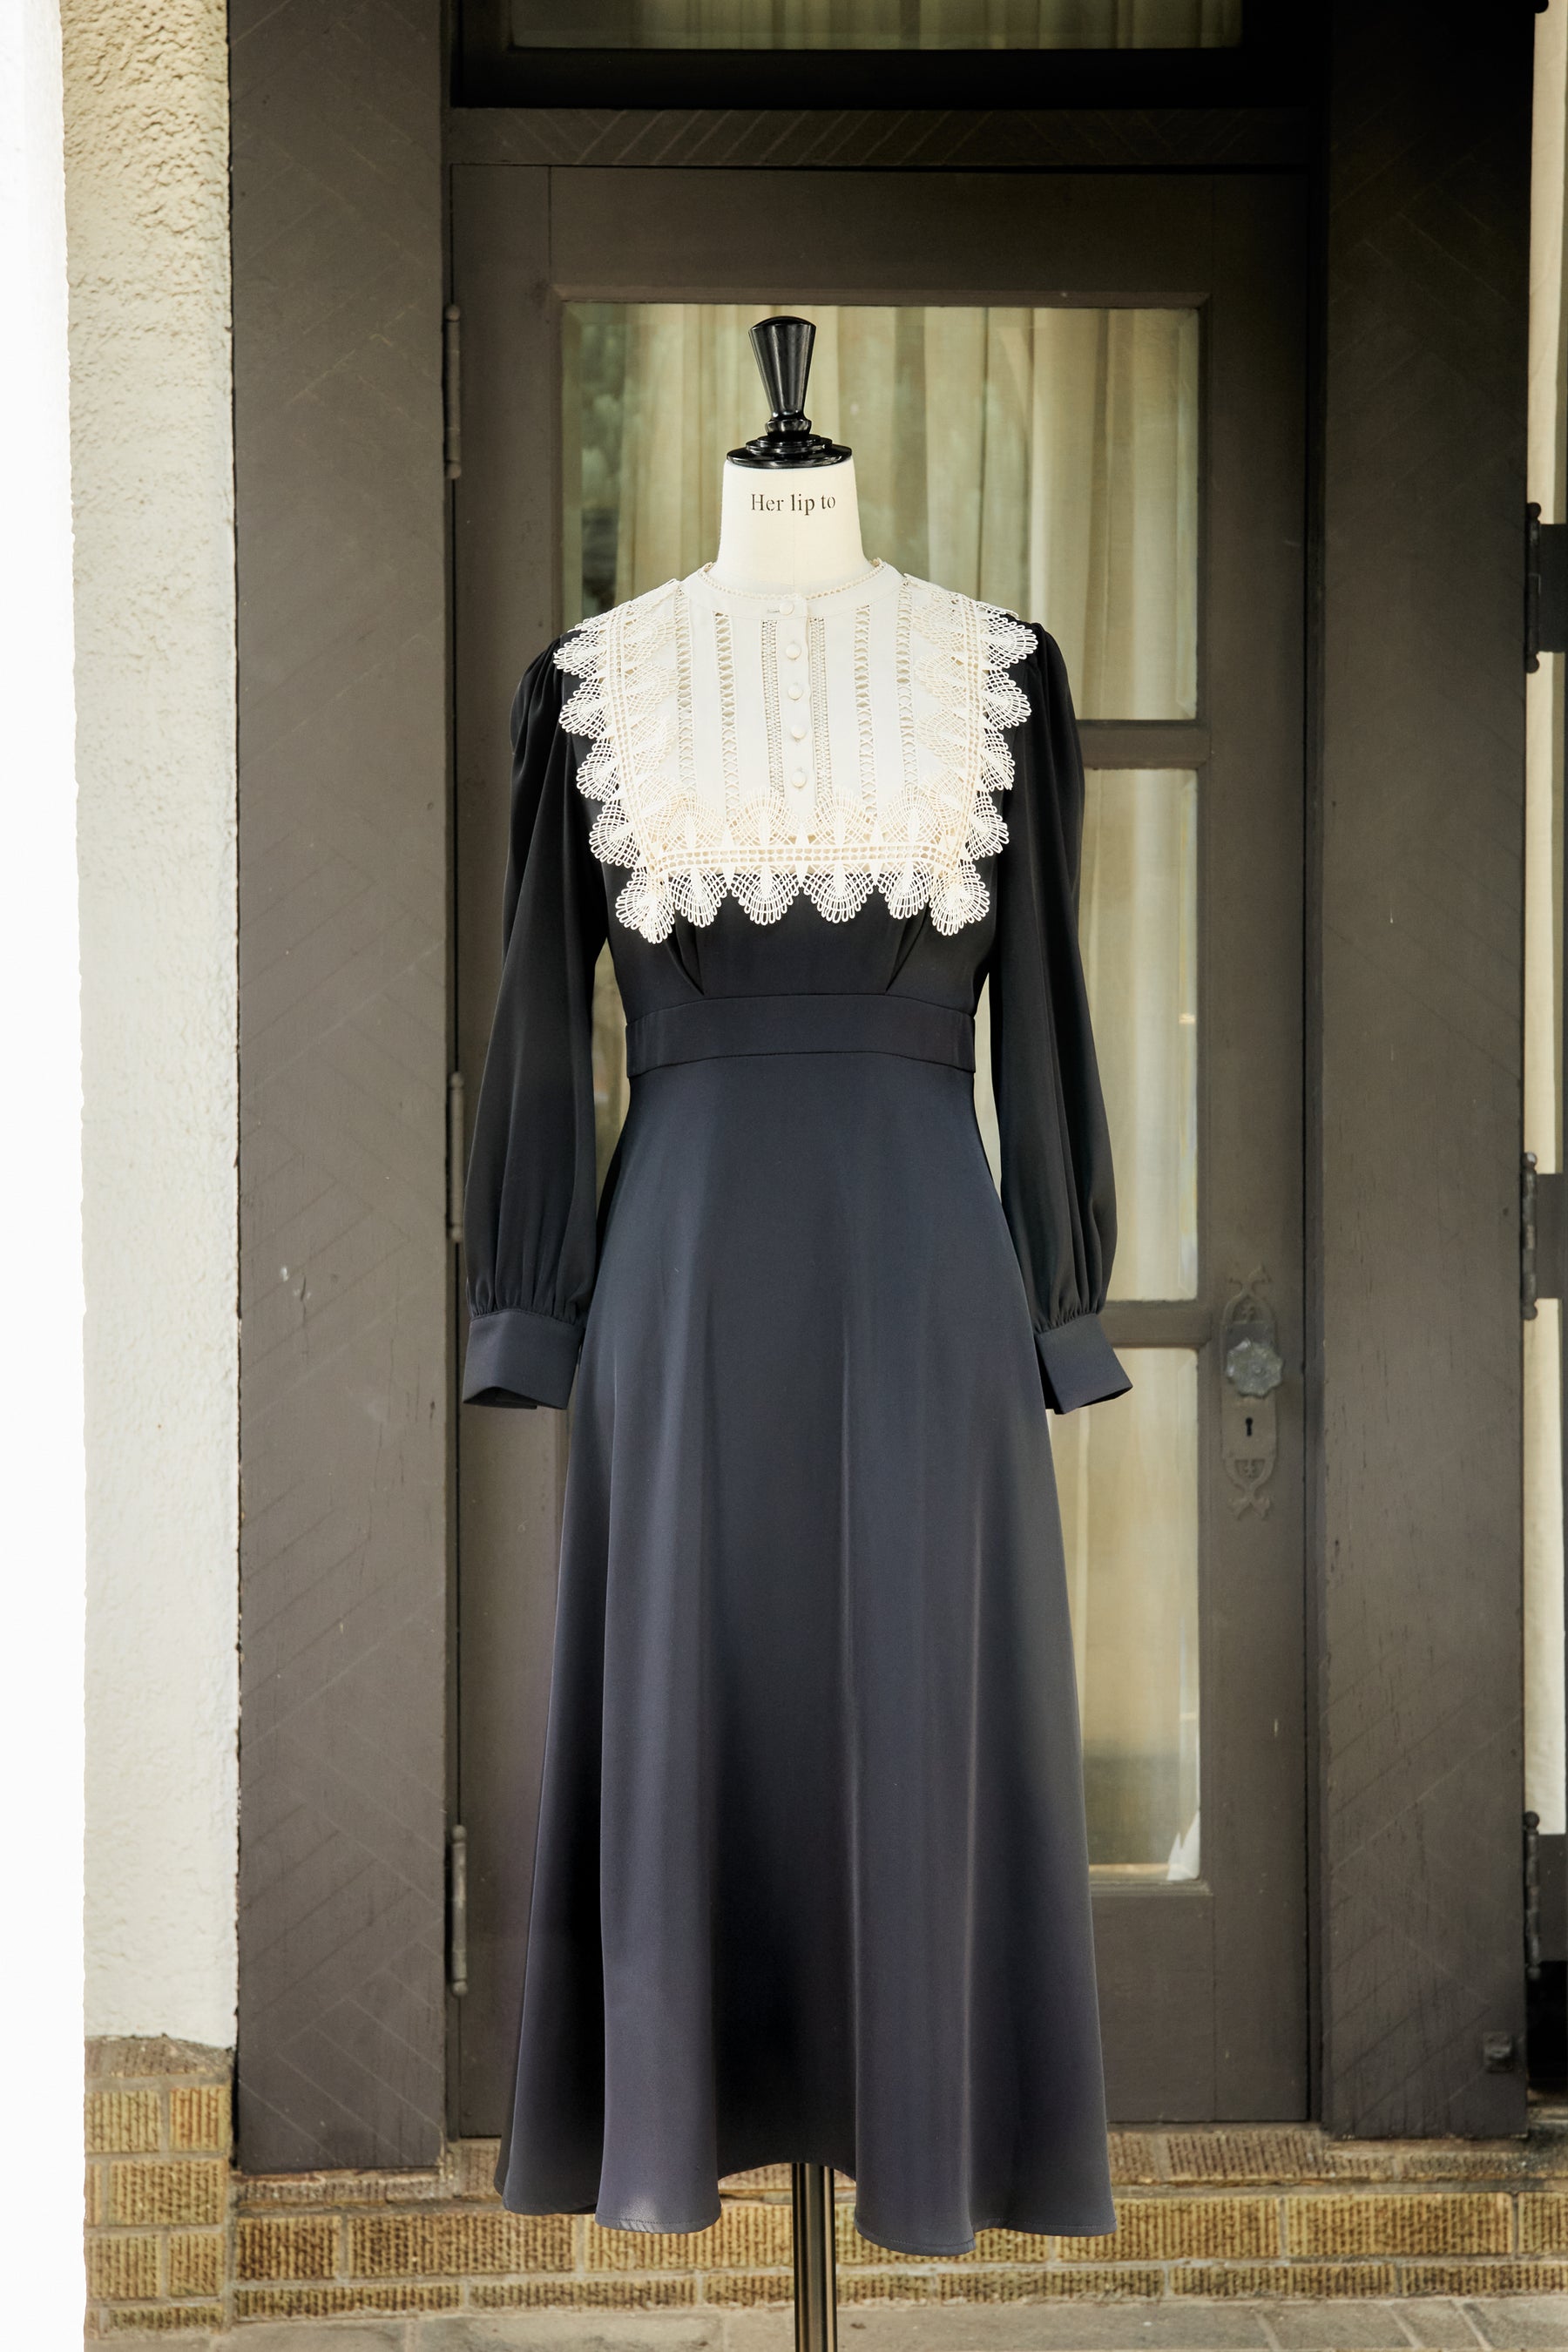 Le Grand Midi Dress herlipto | hartwellspremium.com